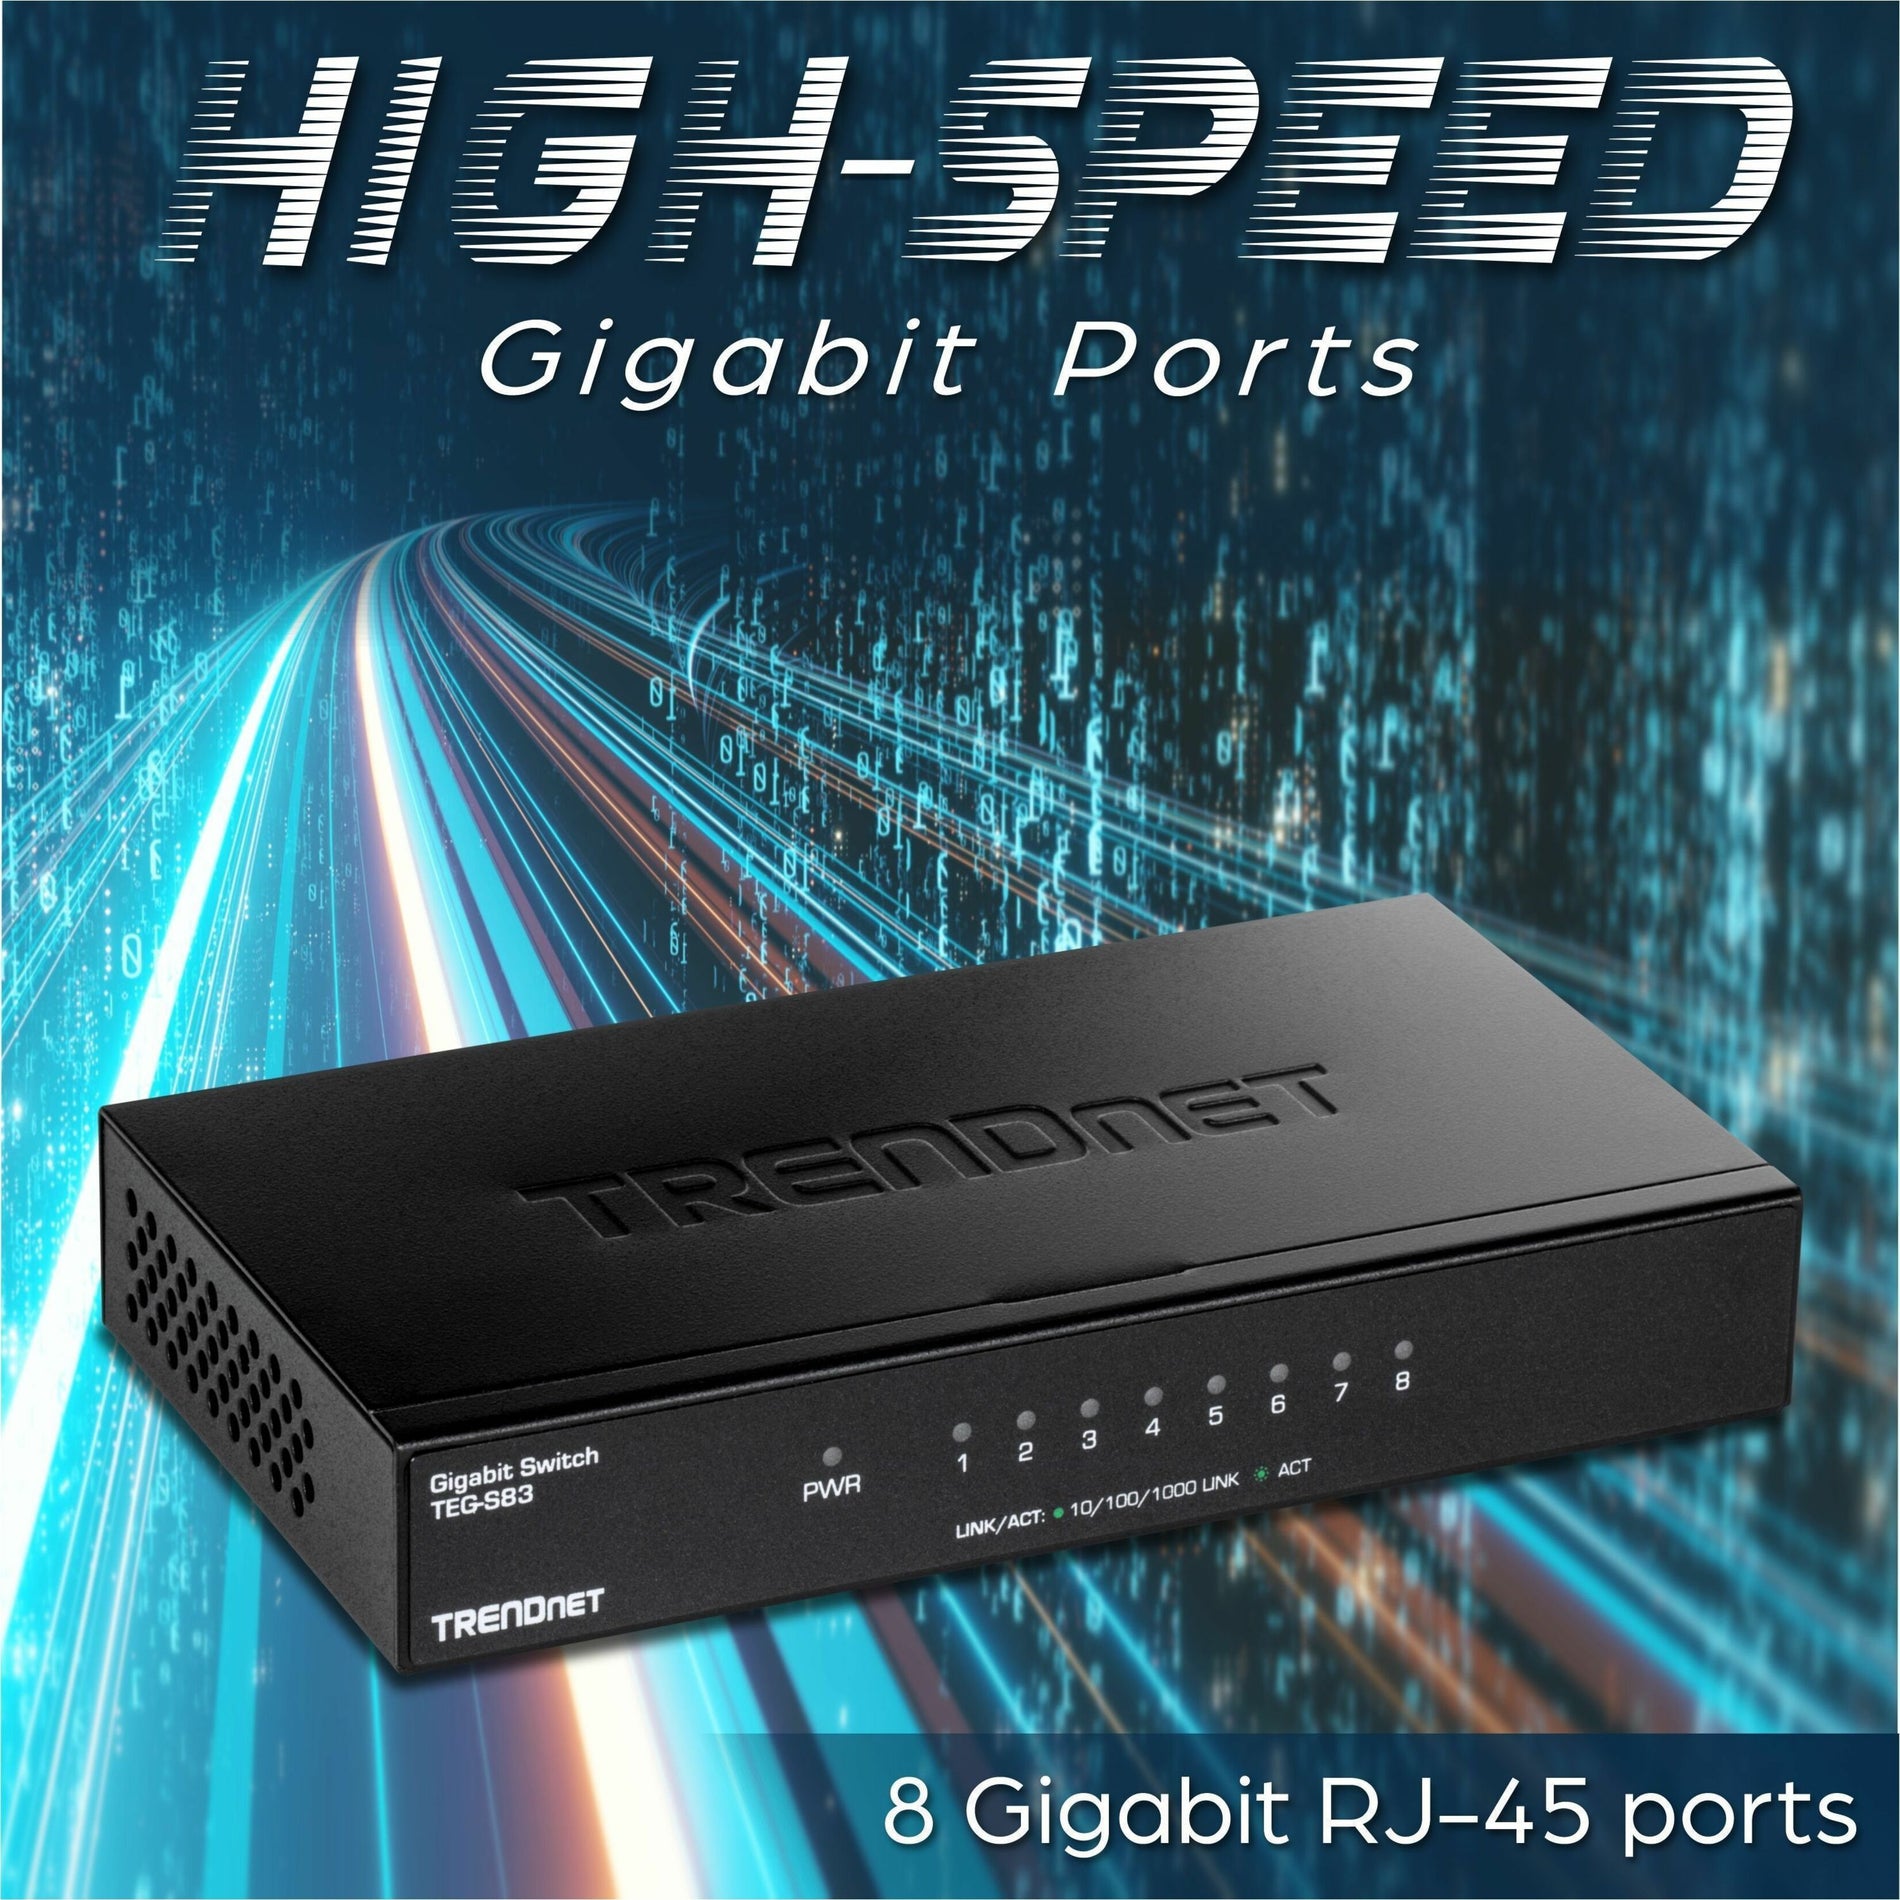 TRENDnet TEG-S83 8-Port Gigabit Desktop Switch, Metal Enclosure, Lifetime Protection, Black